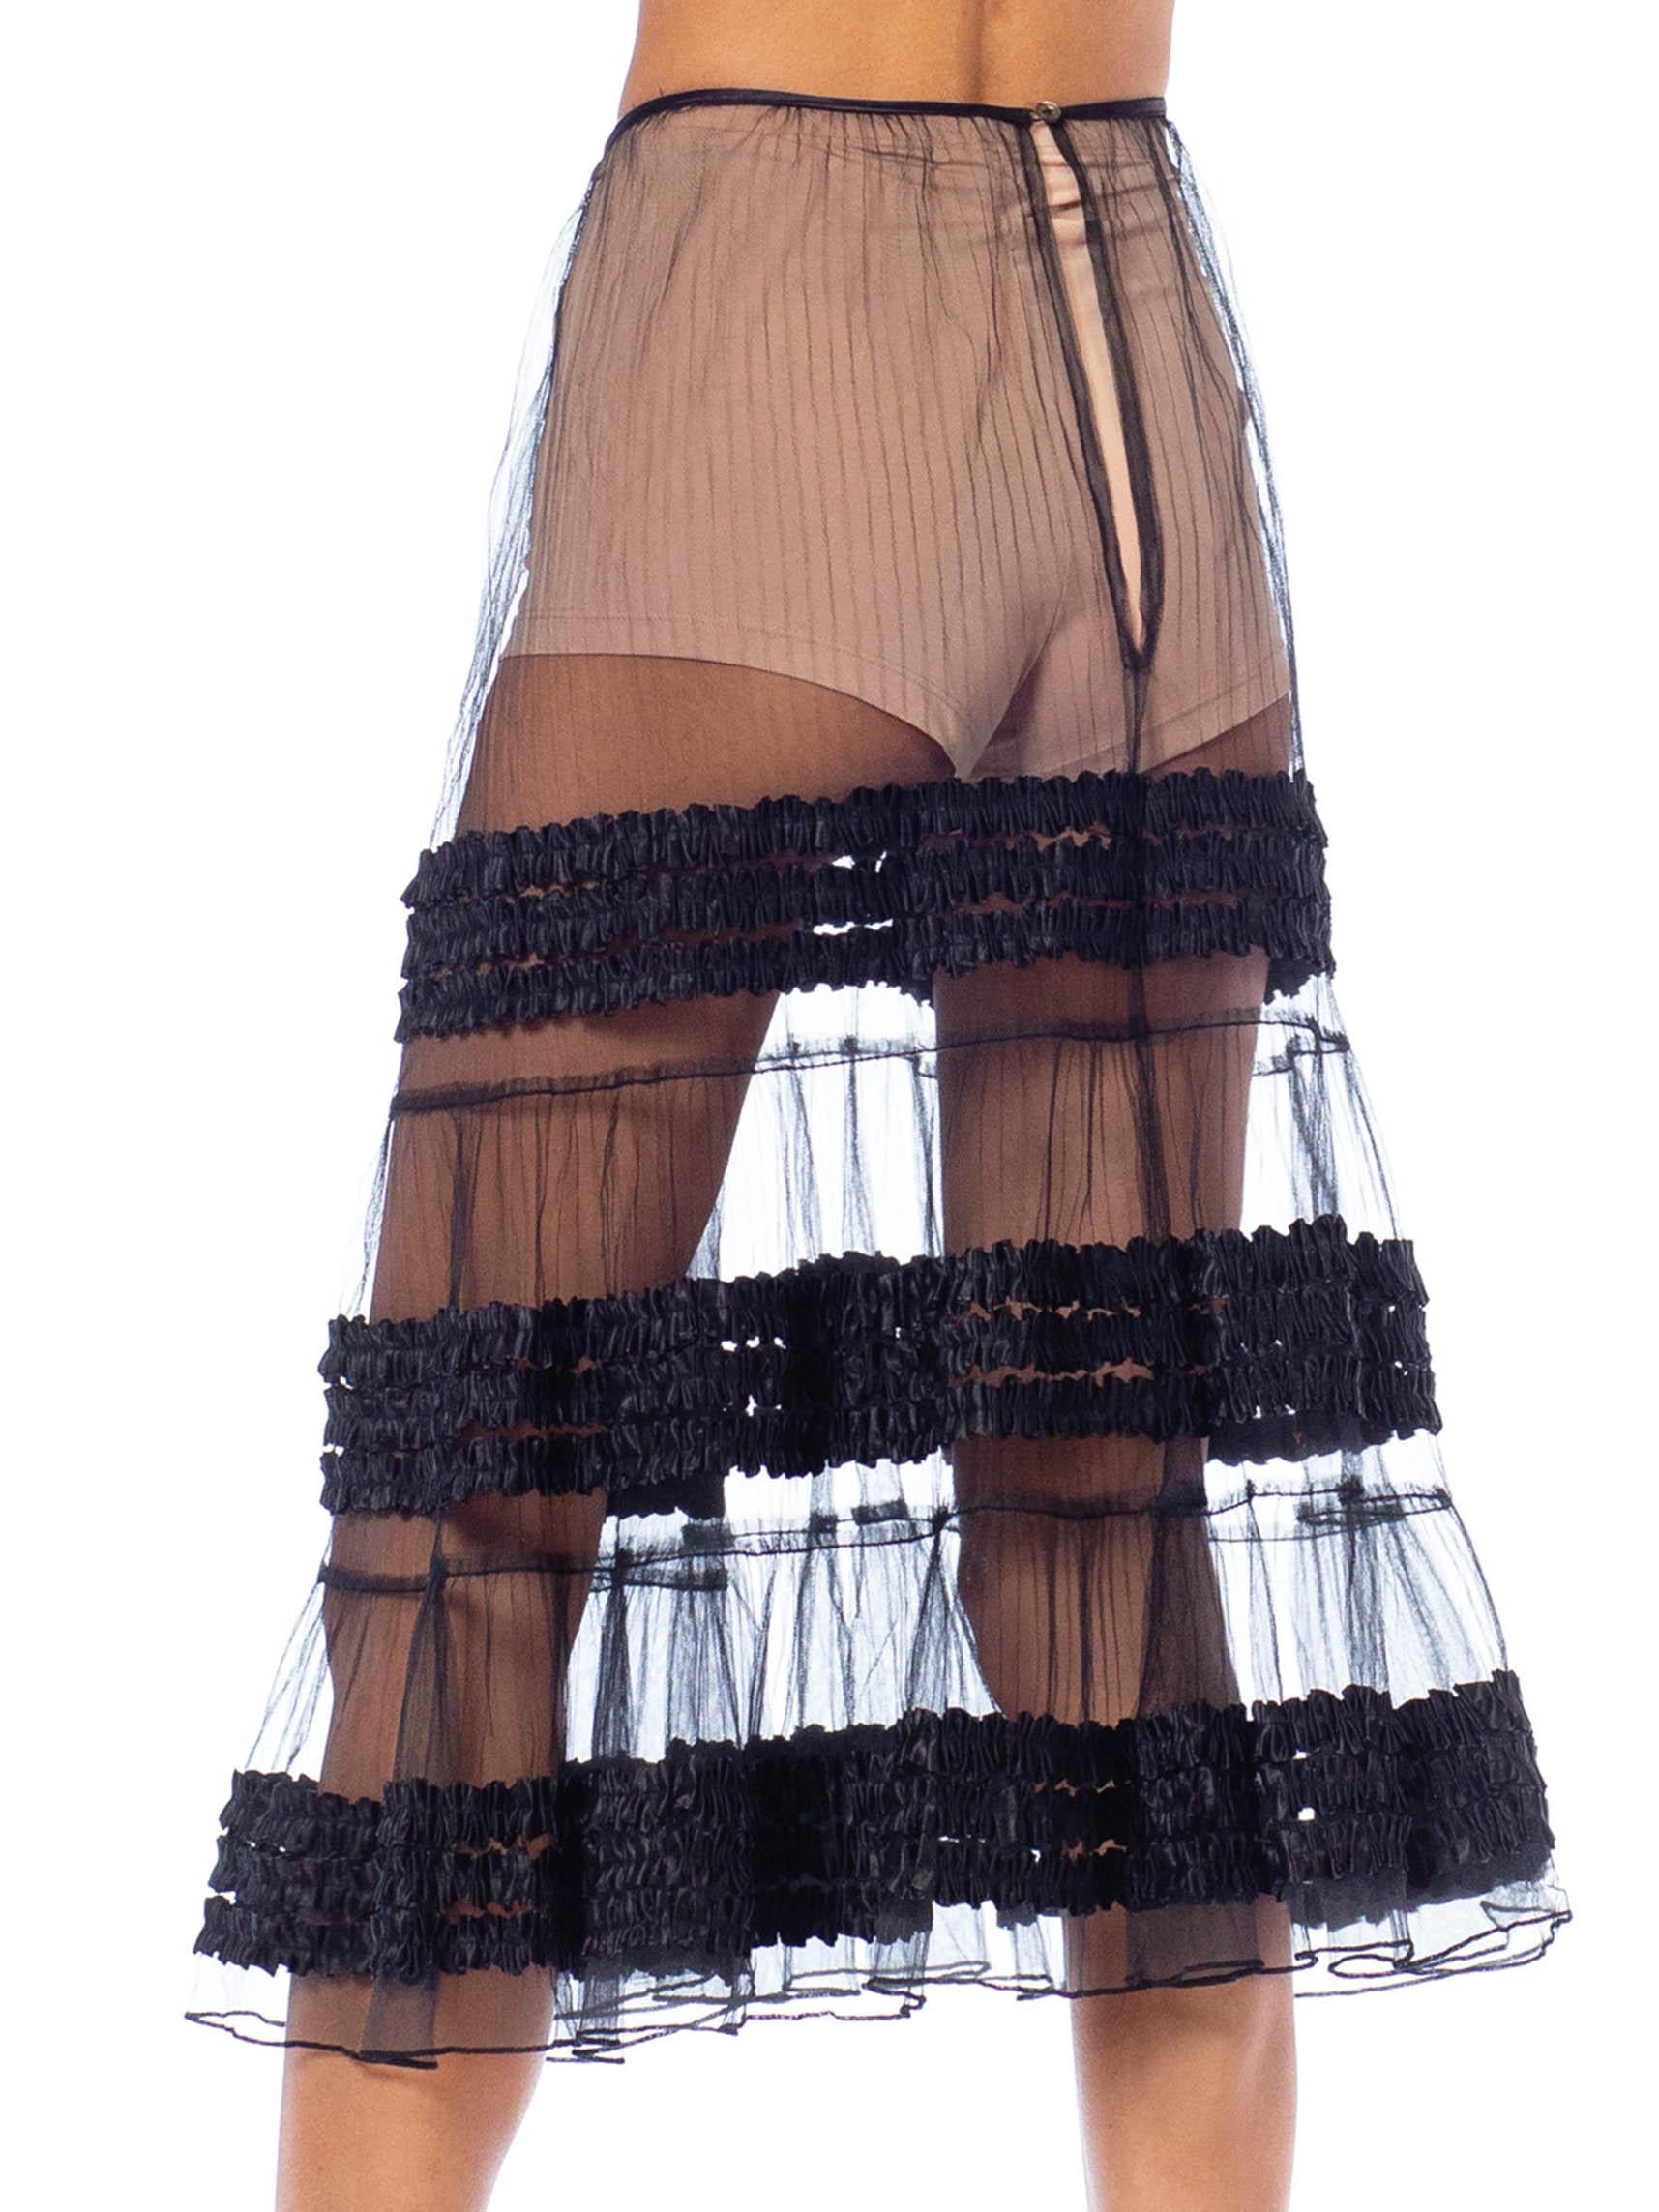 1950S Black Sheer Poly/Nylon Tulle Petticoat Skirt With Satin Ribbon Ruffles 1